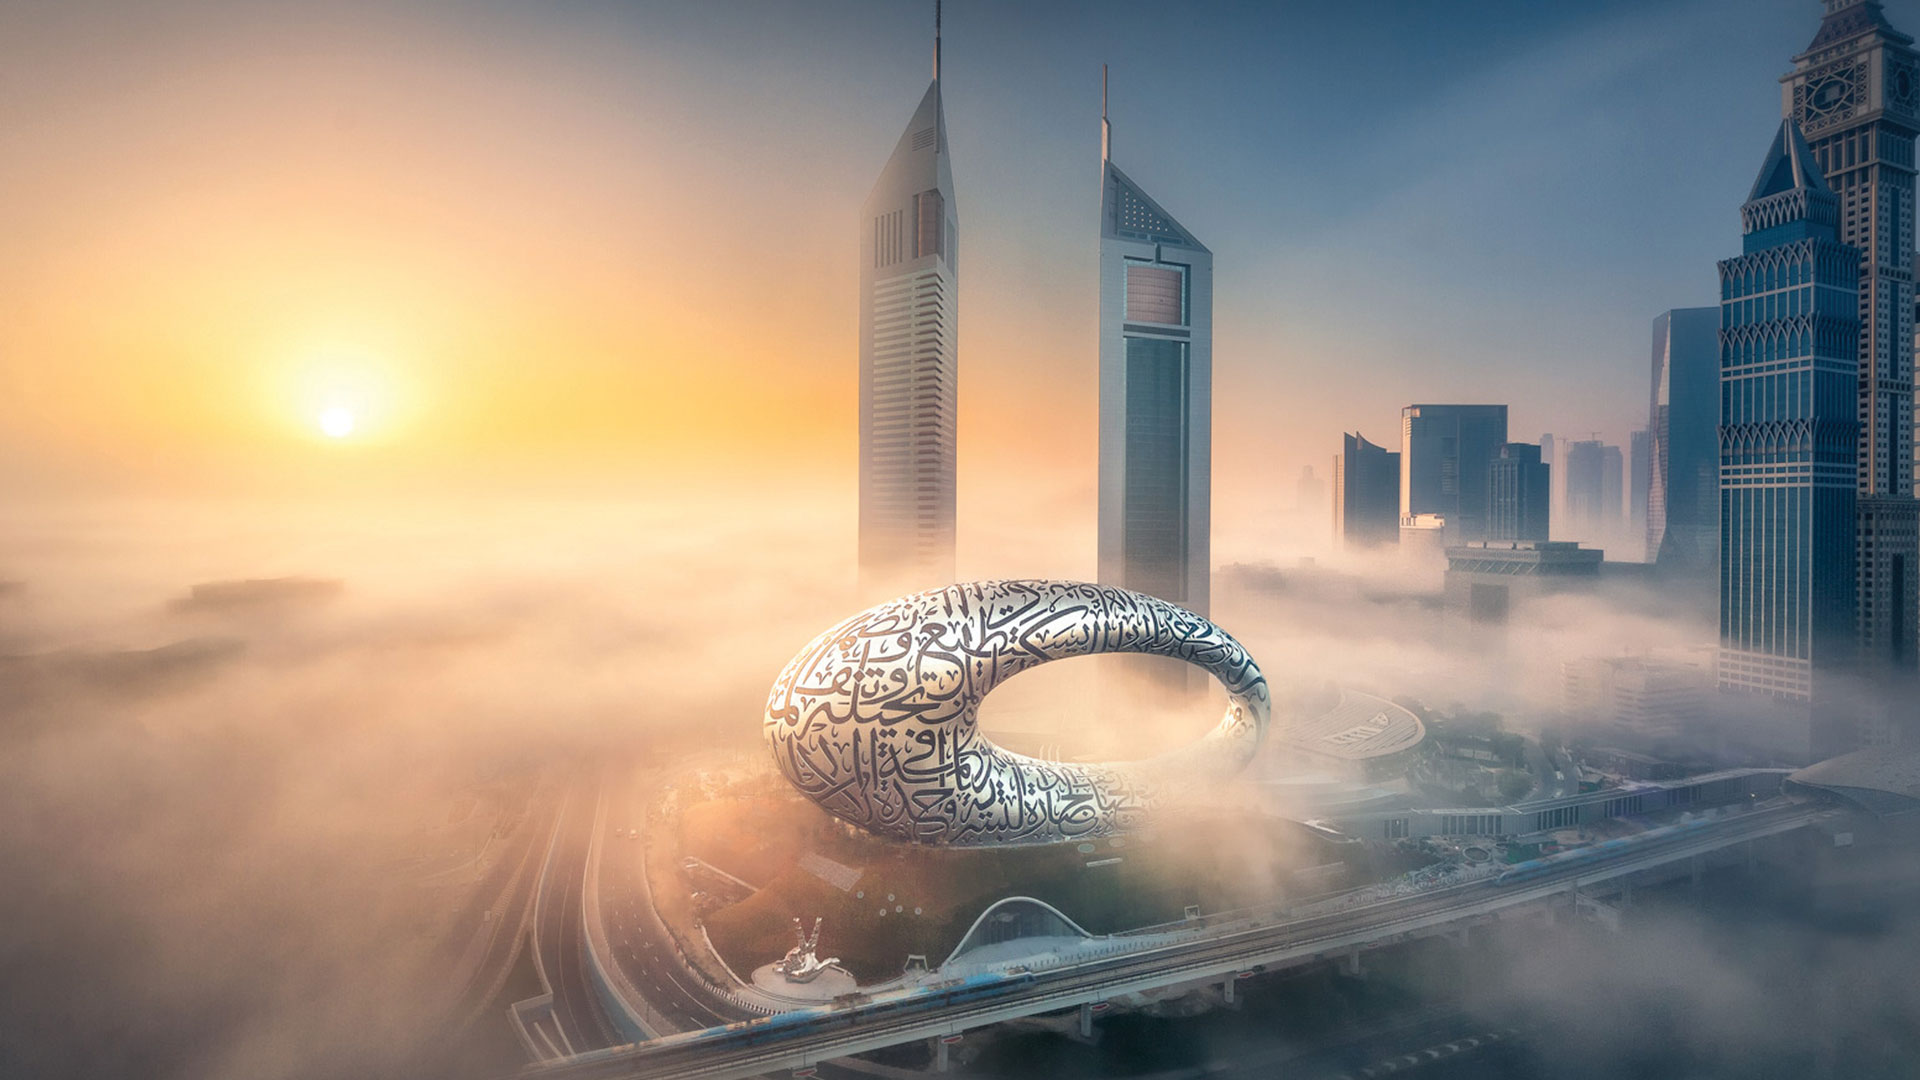 M2now.com - The Future is in Dubai